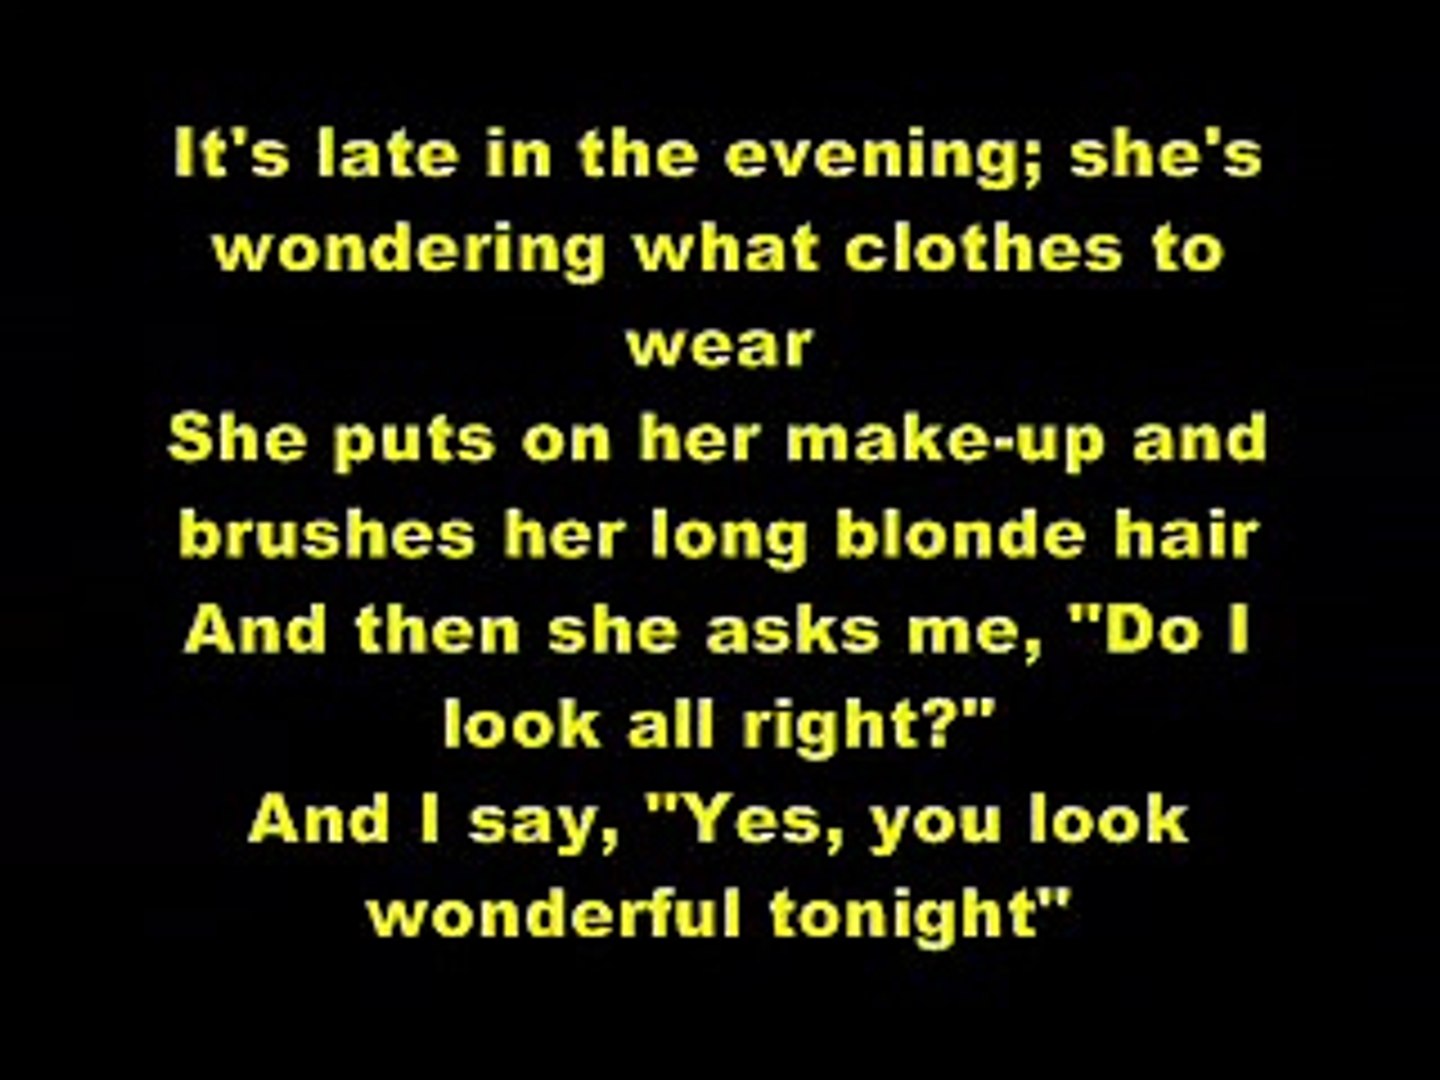 Wonderful you lyrics look tonight Michael Buble